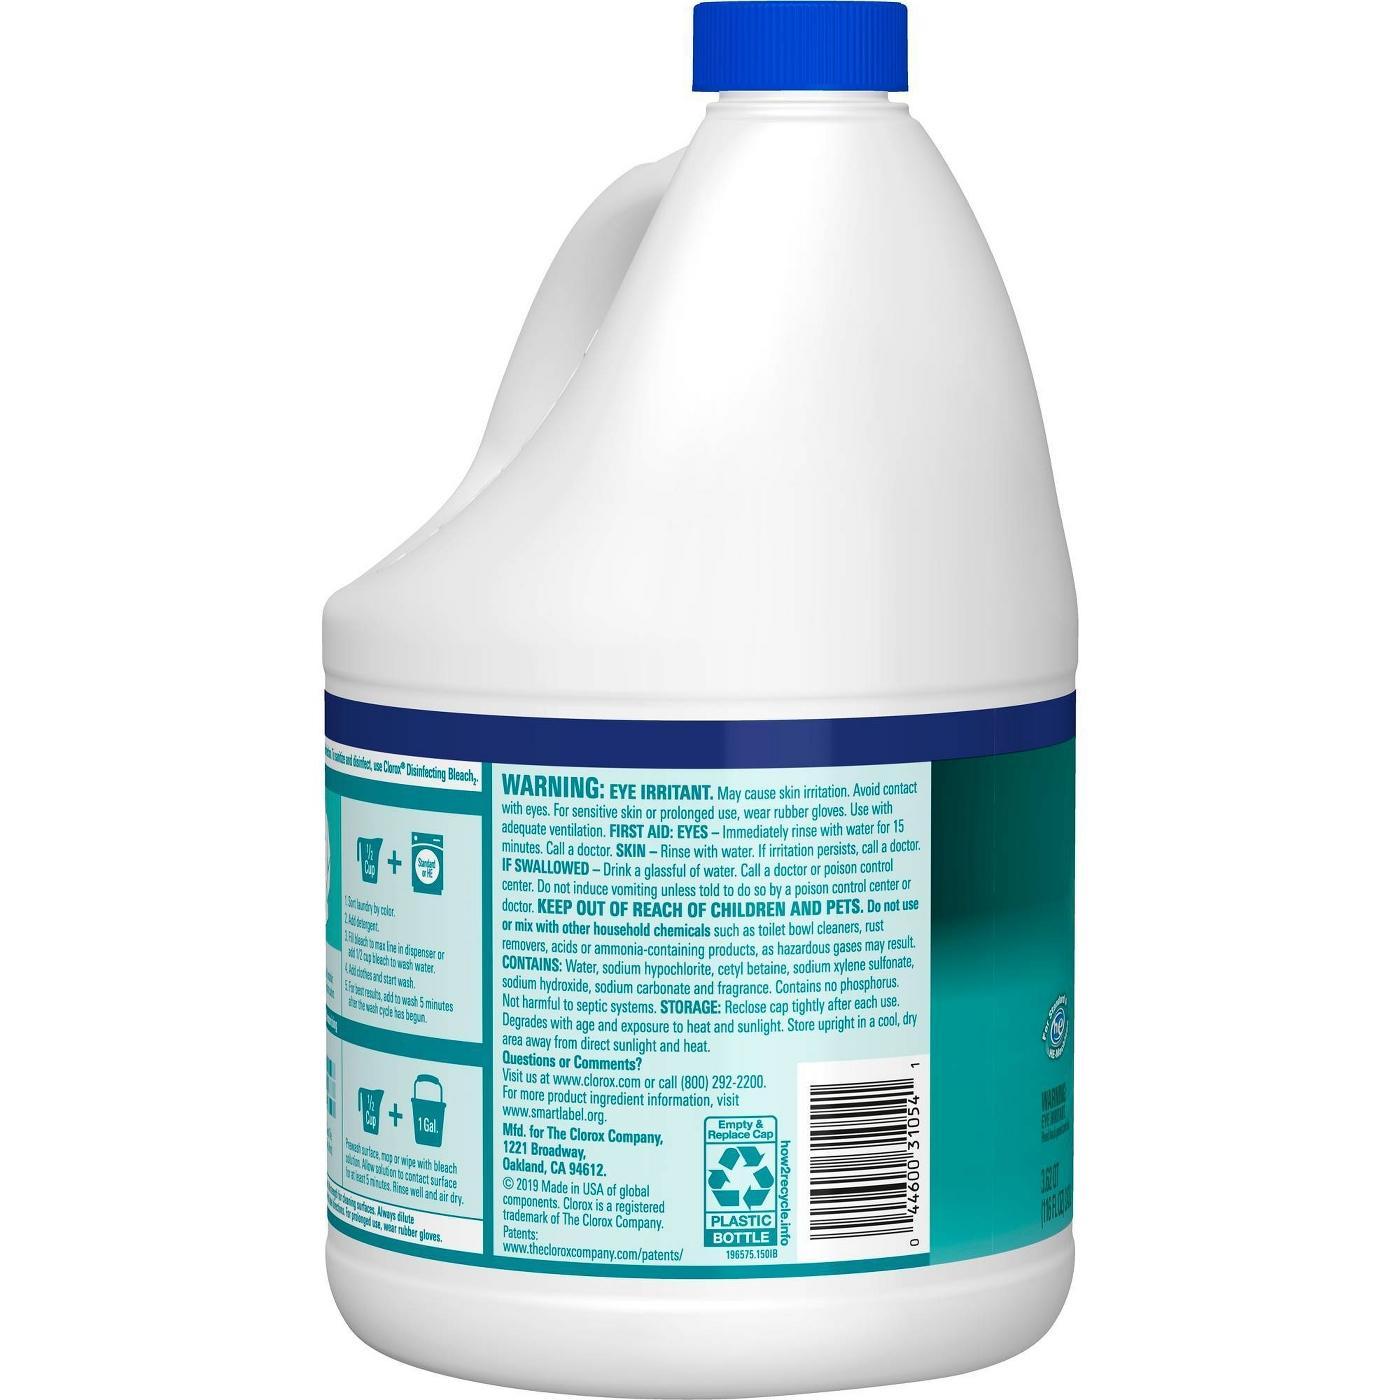 Clorox Splash-Less Liquid Bleach, Clean Linen Scent, 116oz fl oz (2 Pack)